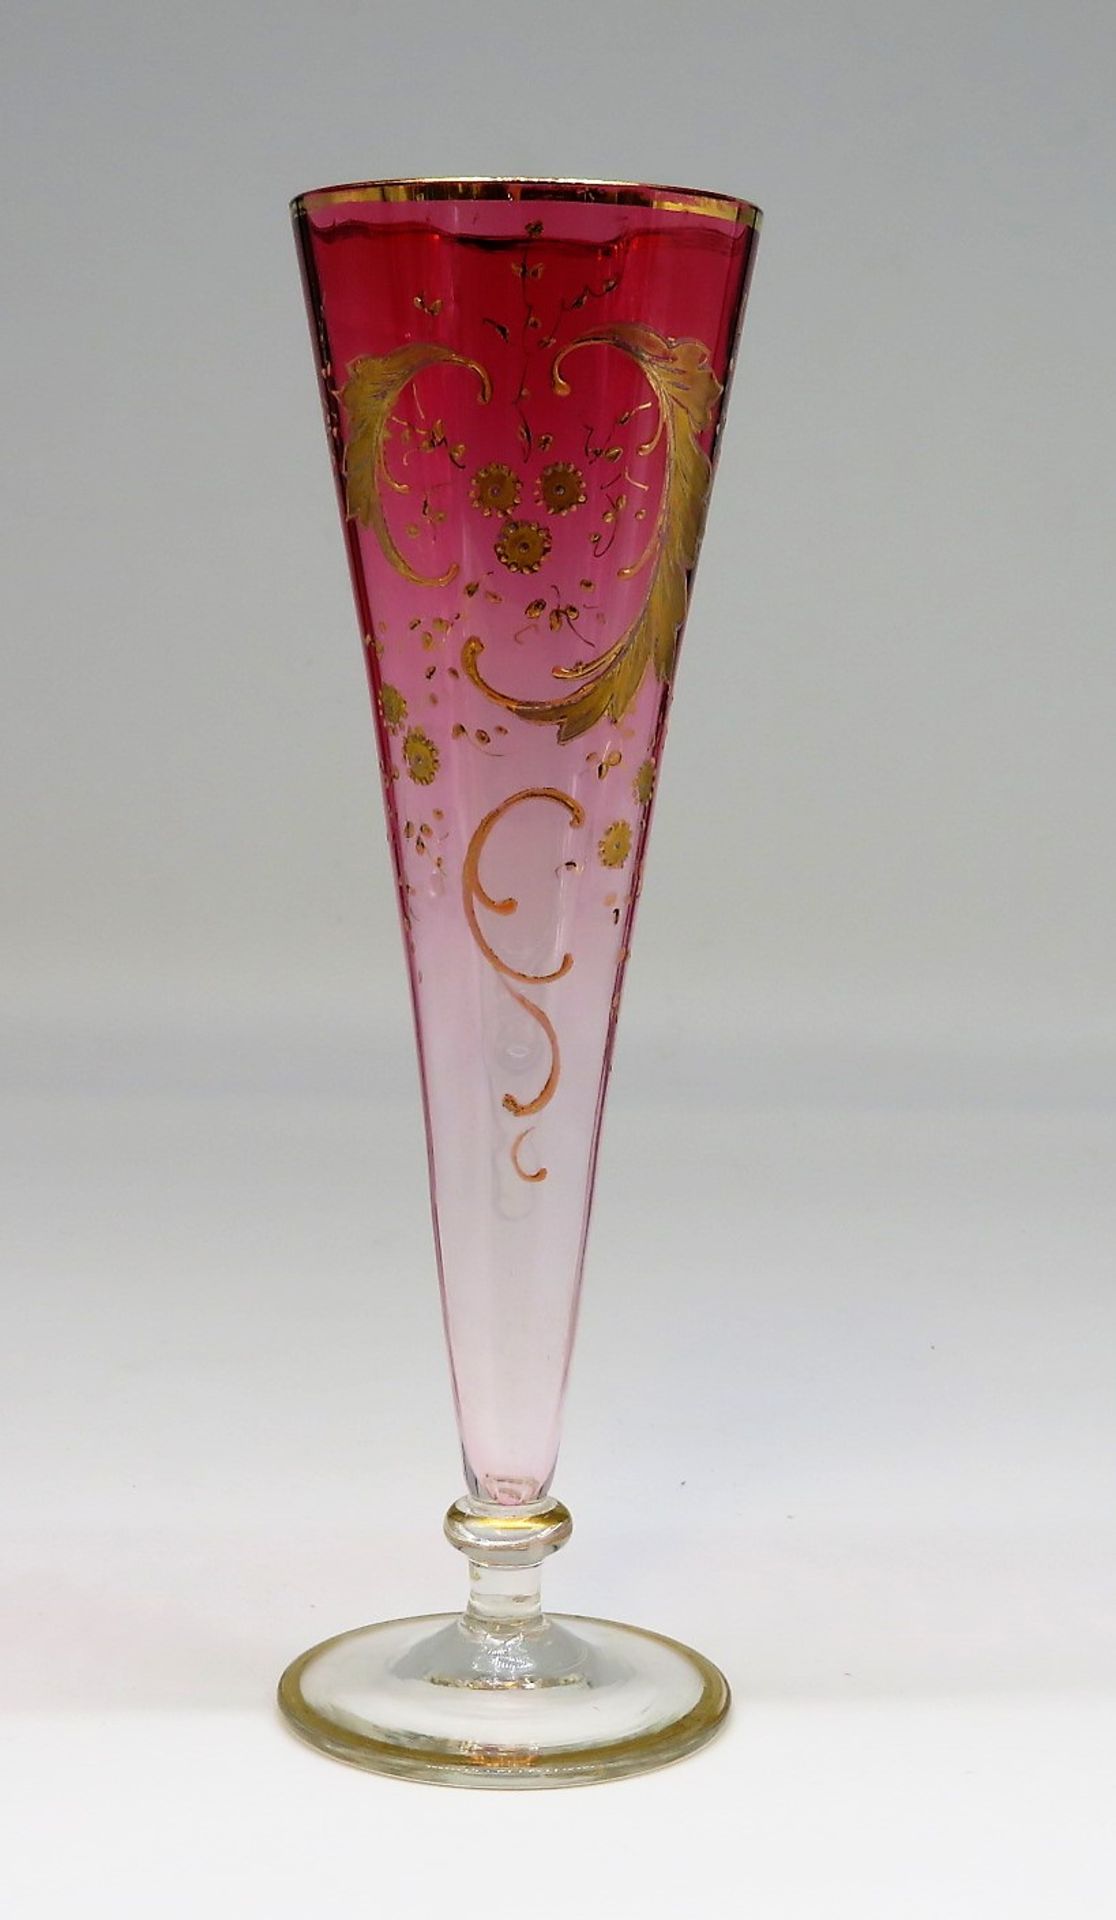 Flötenglas, Jugendstil, um 1900, rosafarben eingefärbtes Glas mit Goldmalerei, h 22,5 cm, d 7 cm.